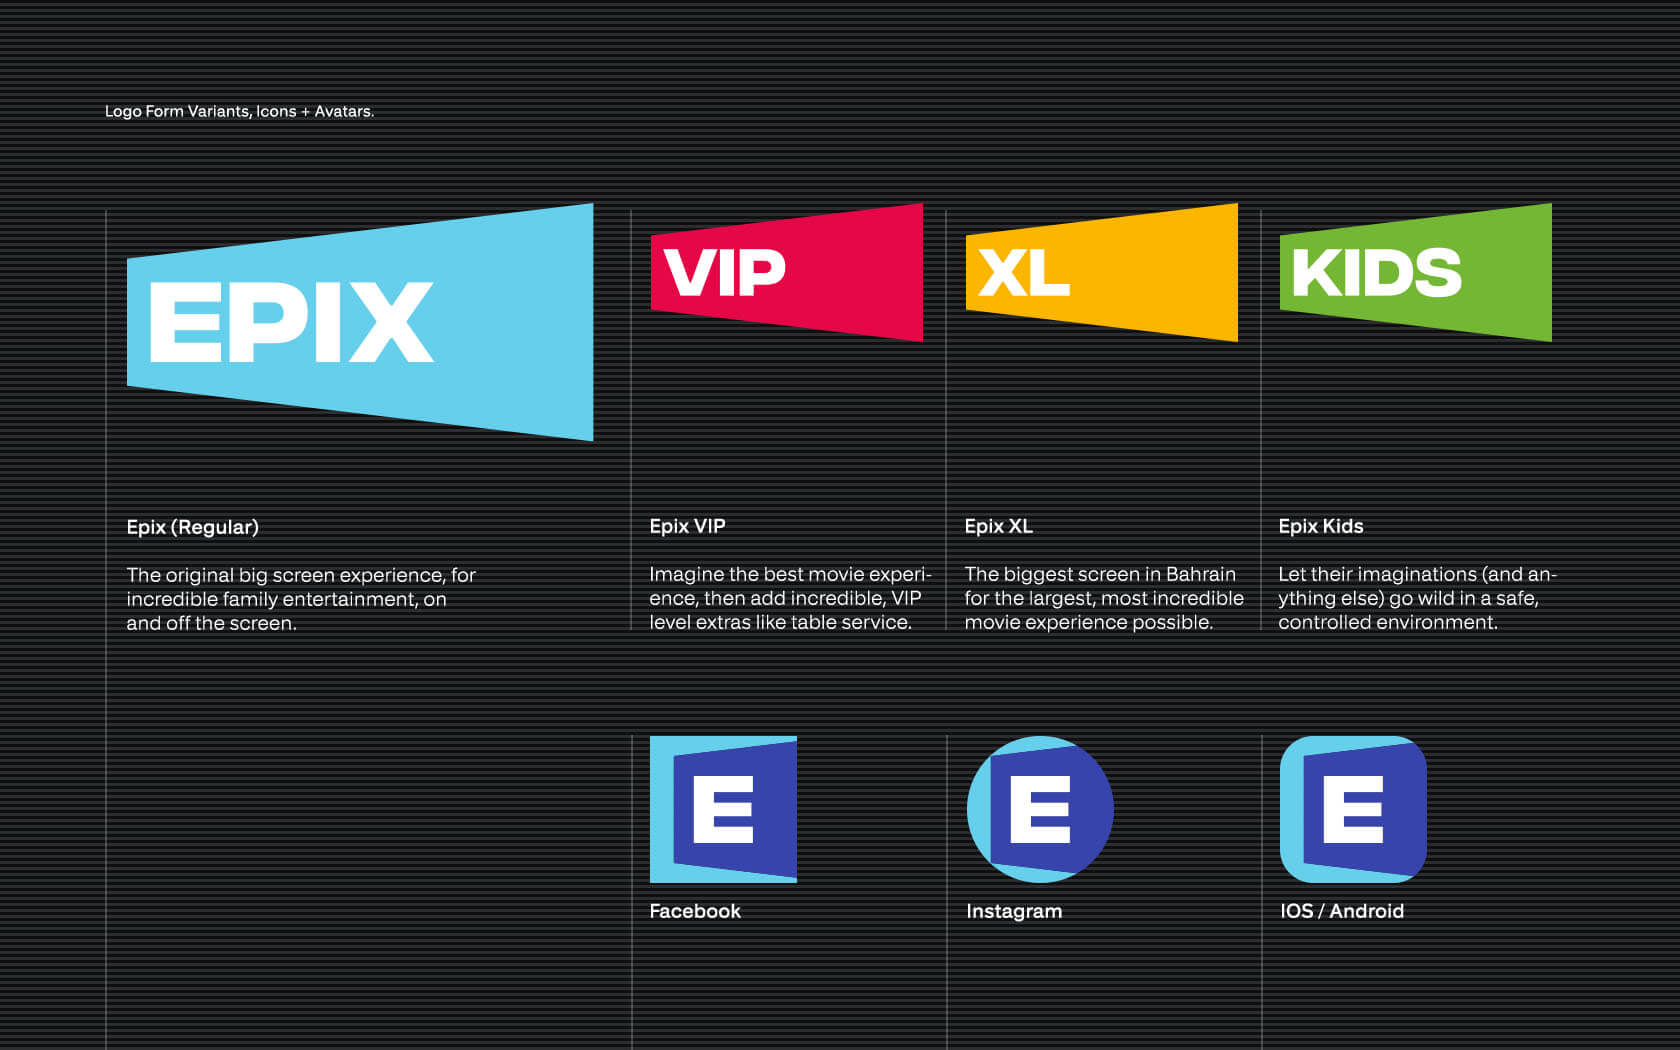 Expix logo colour variants and avatars